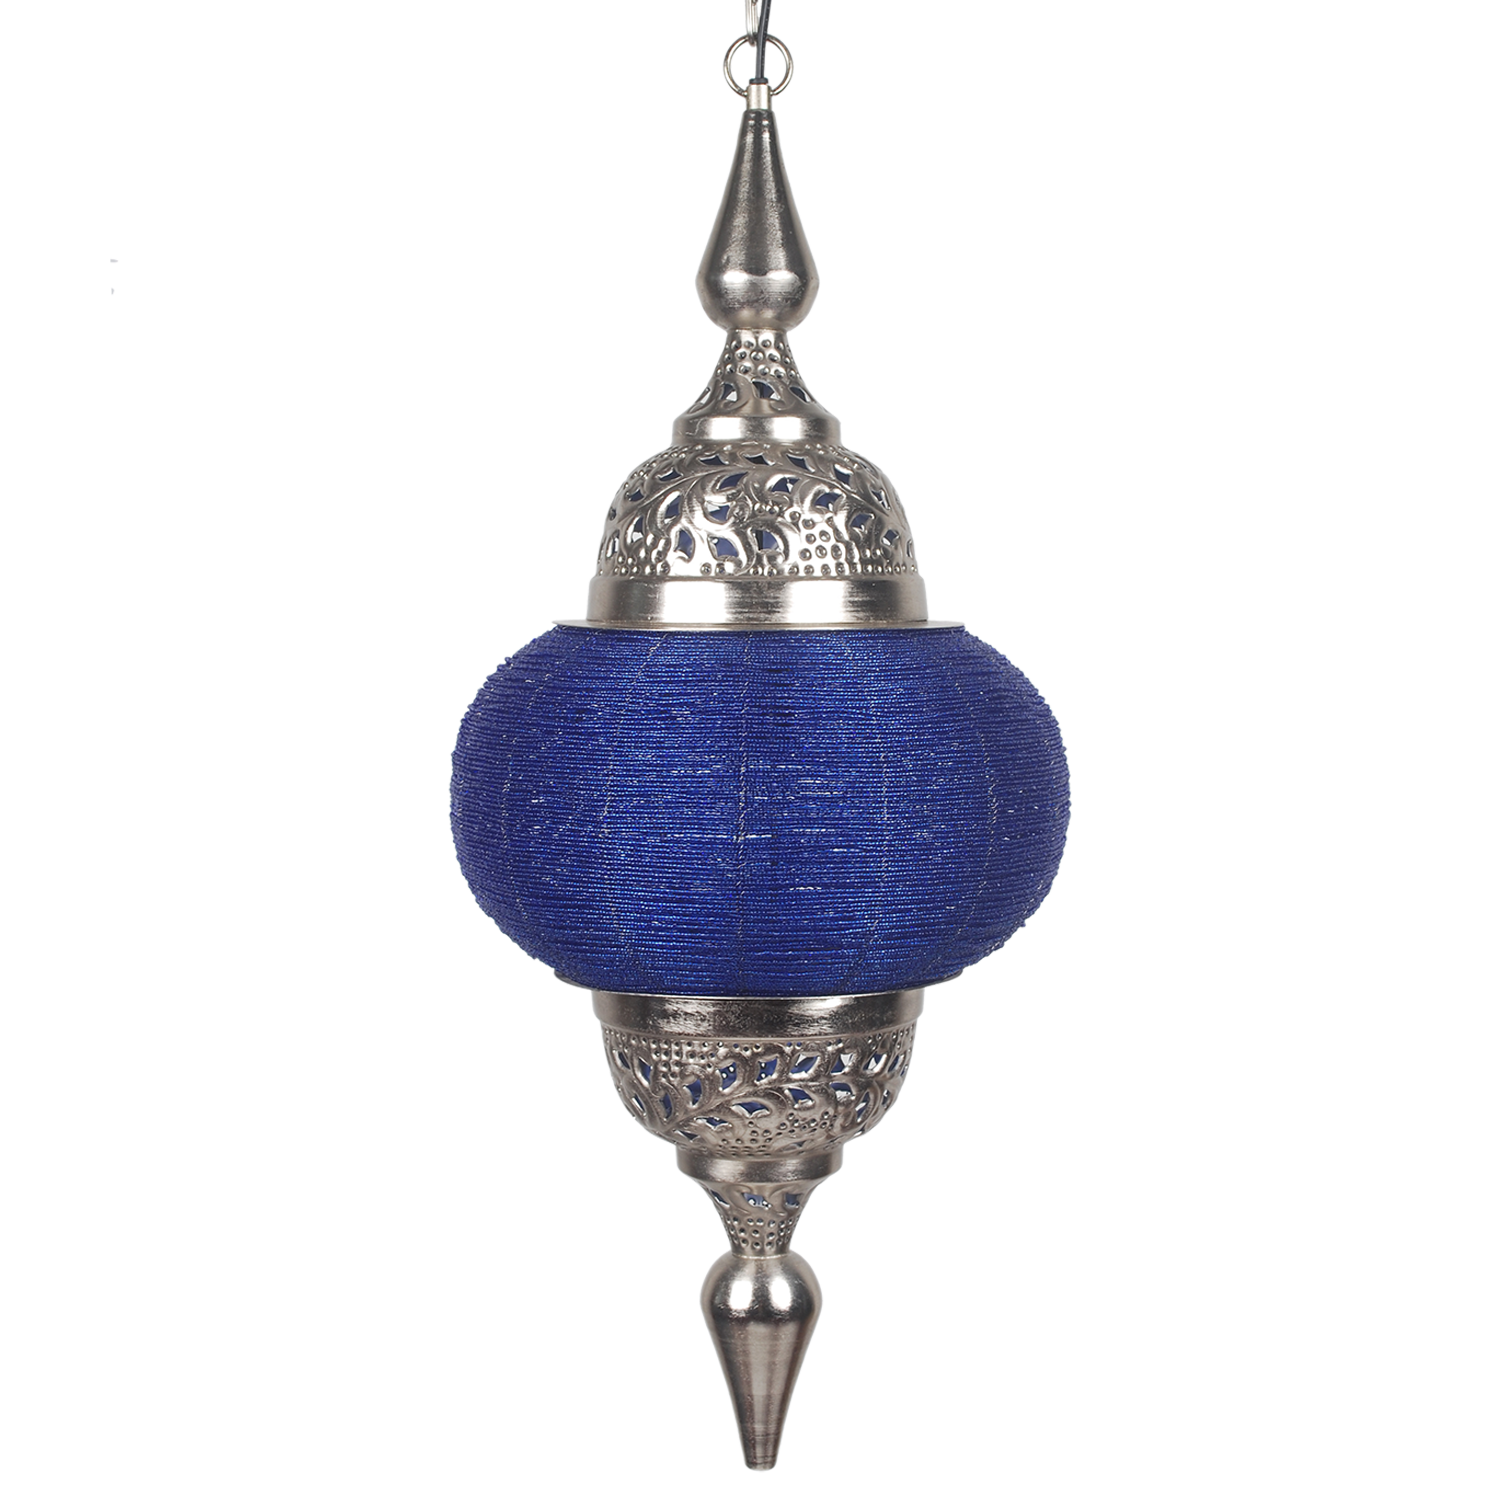 Hanglamp Arabesque groot blauw